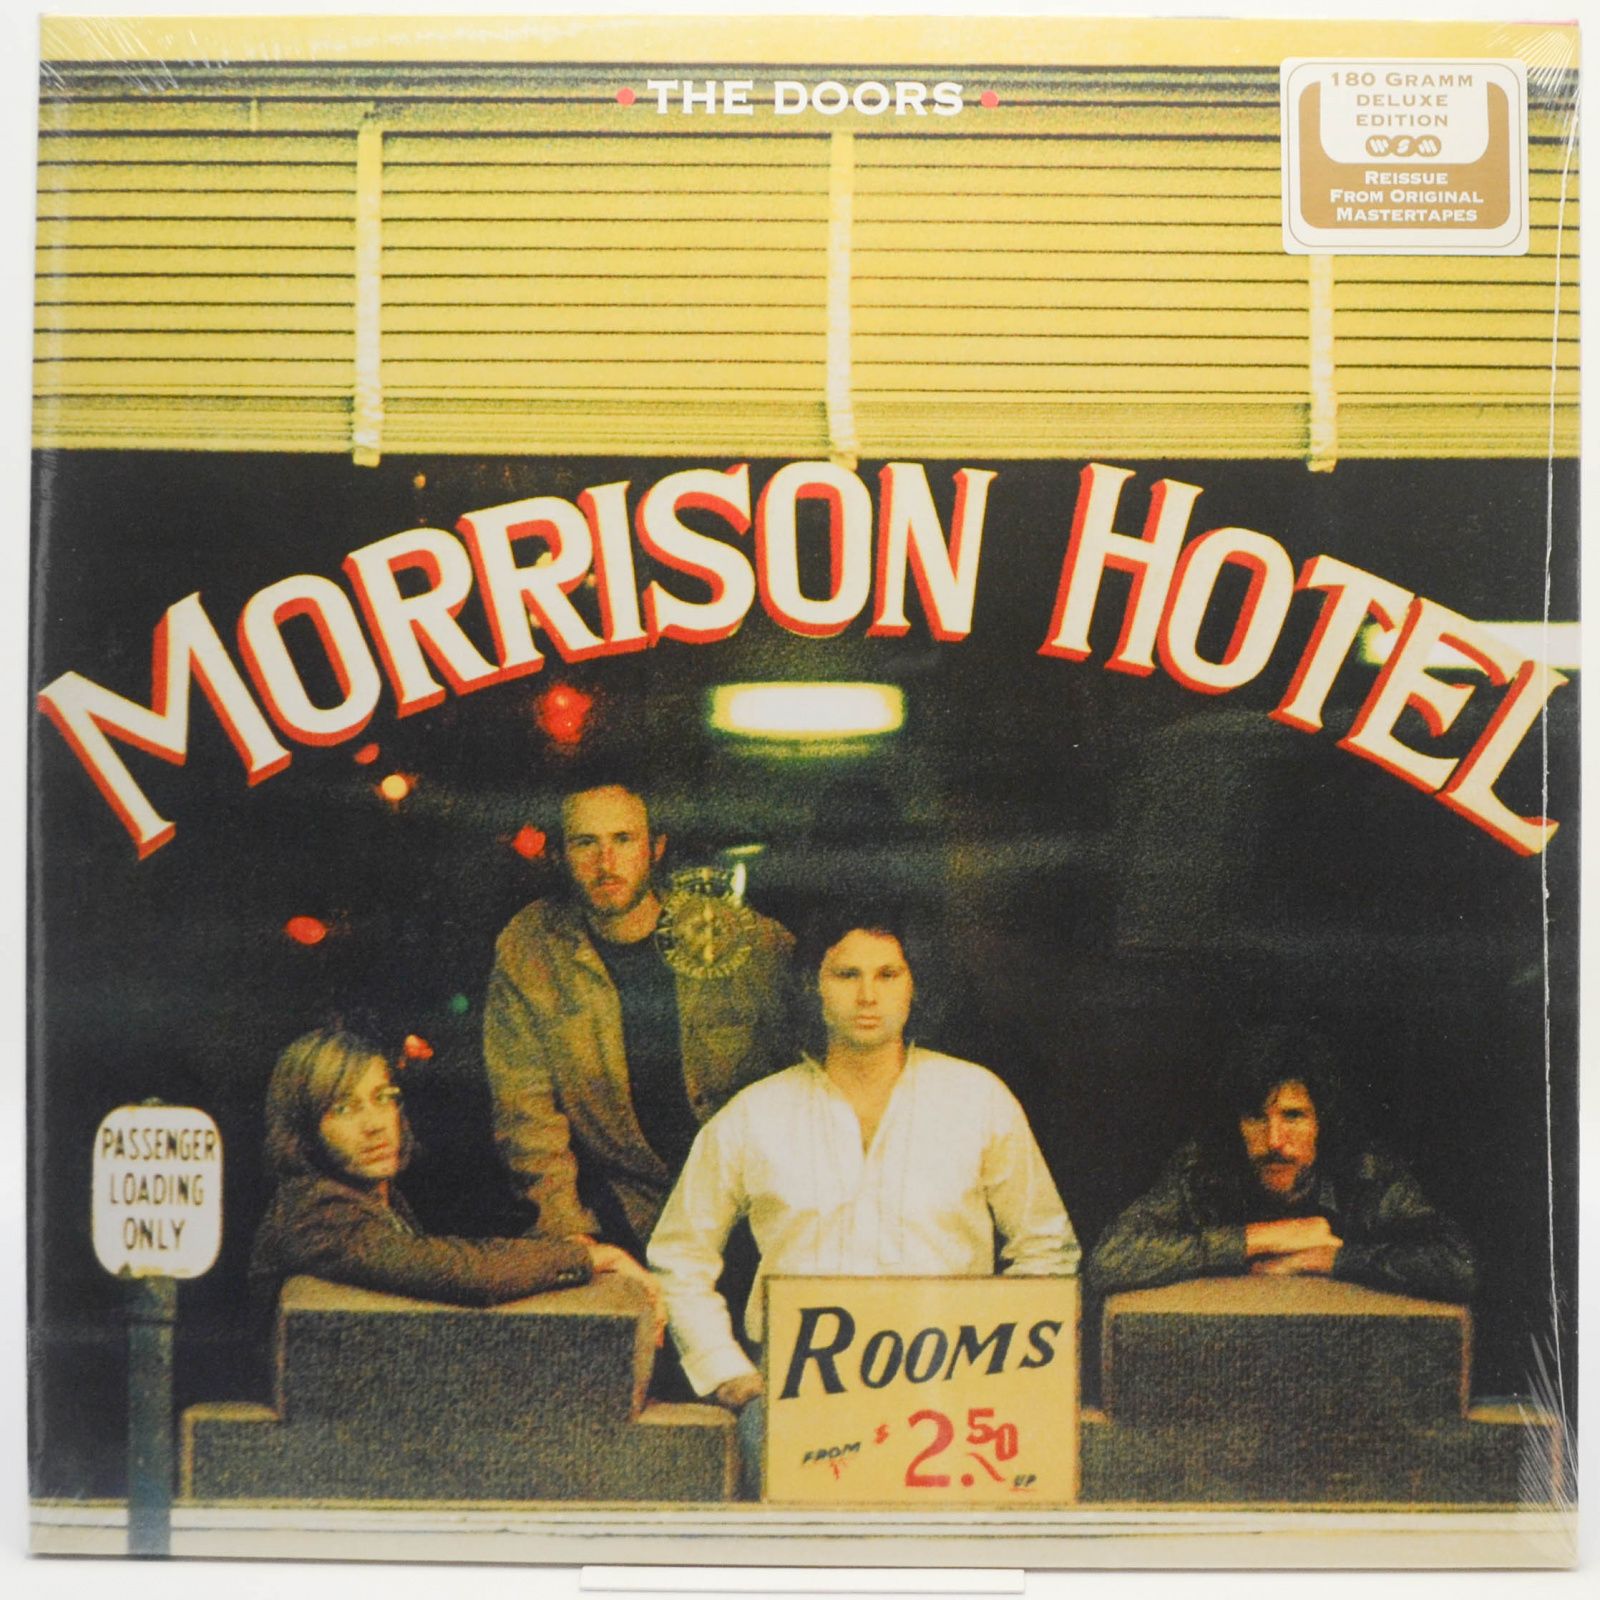 Morrison Hotel, 1970